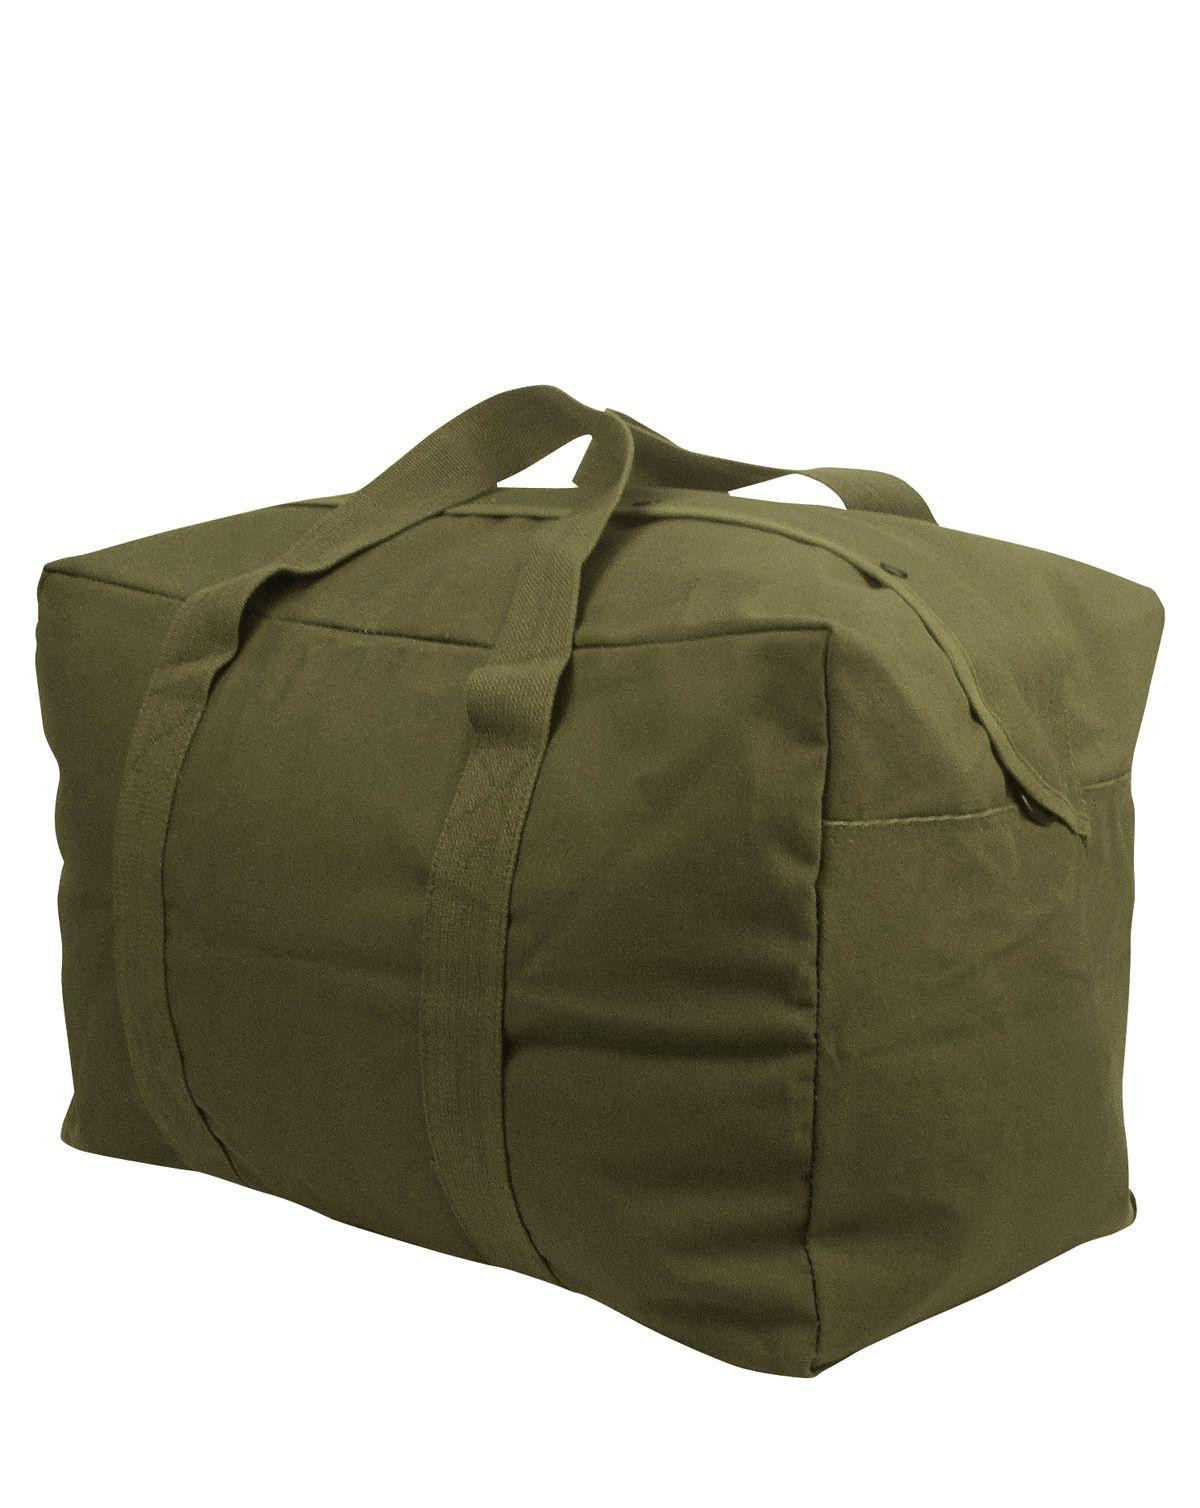 11: Rothco Parachute Cargo Taske - 75 liter (Oliven, One Size)